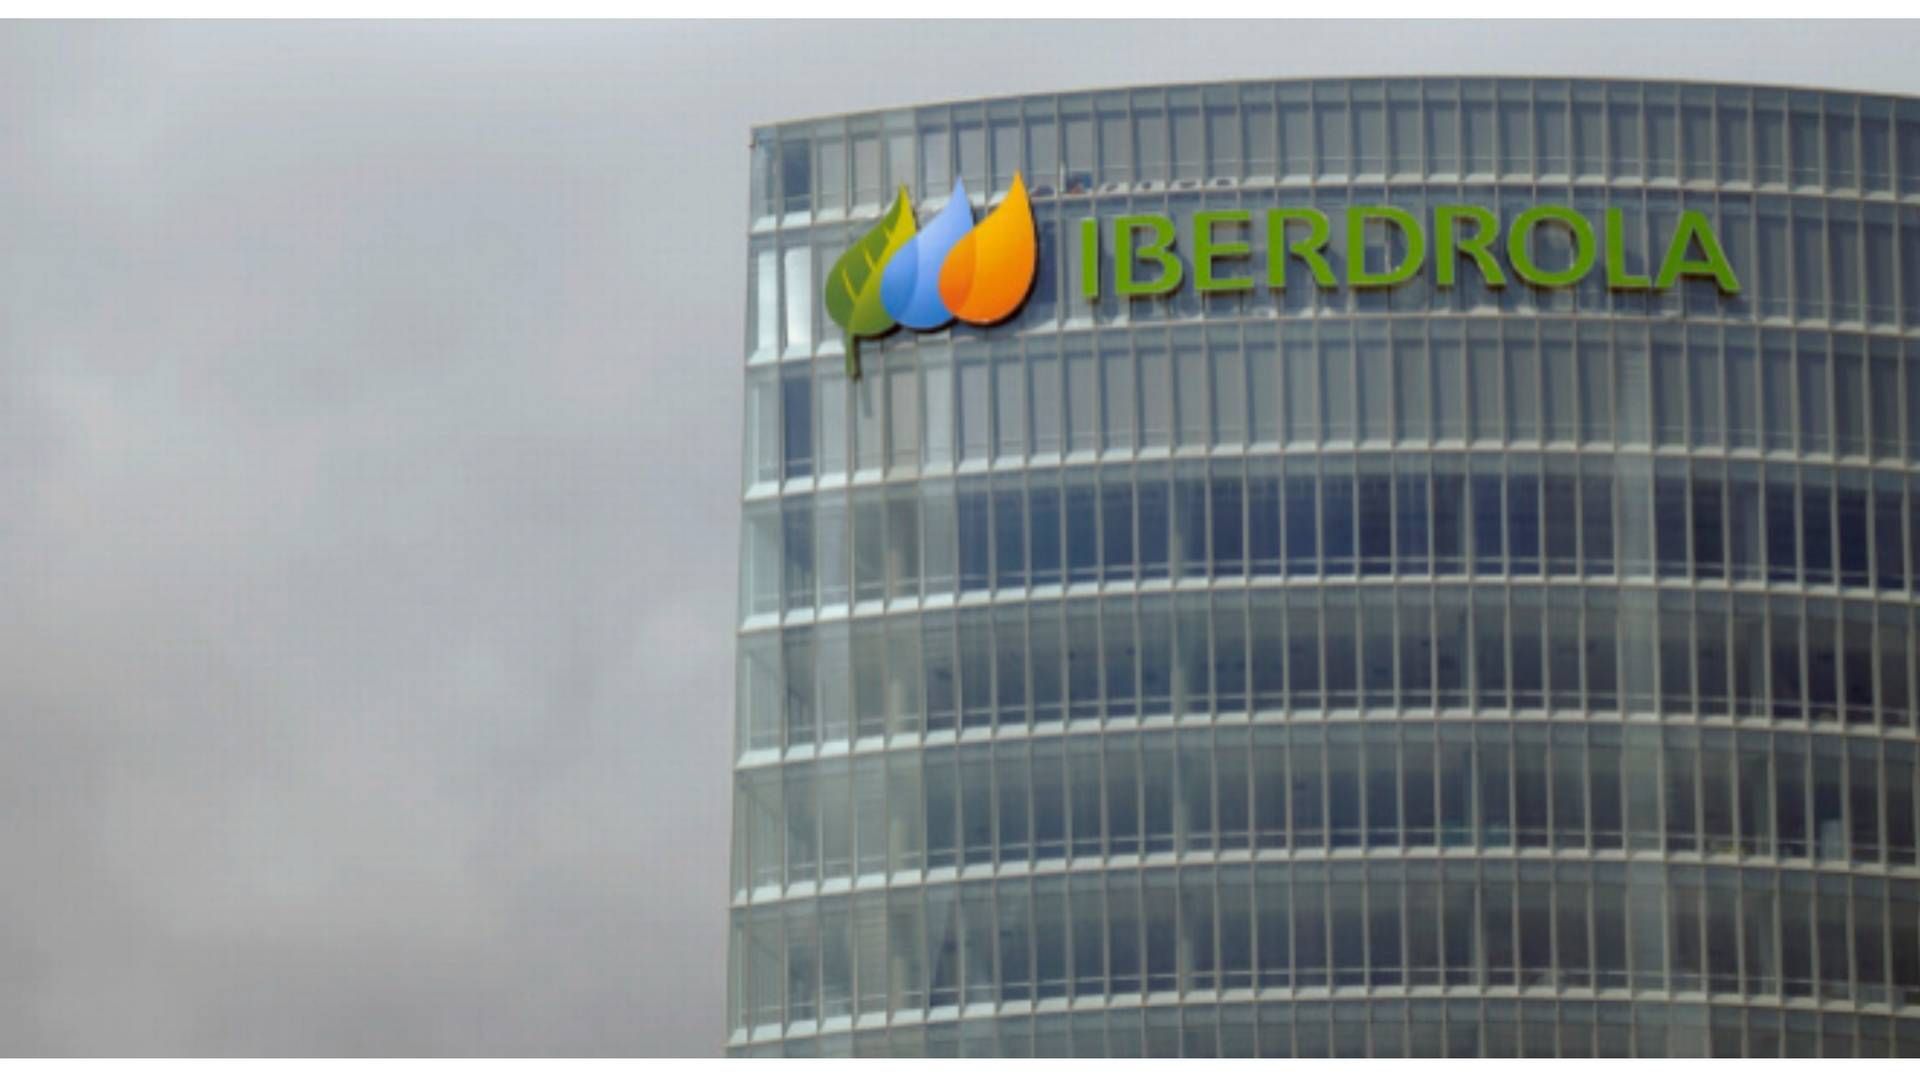 Iberdrola headquarters in Bilbao, Spain. | Photo: PR Iberdrola.